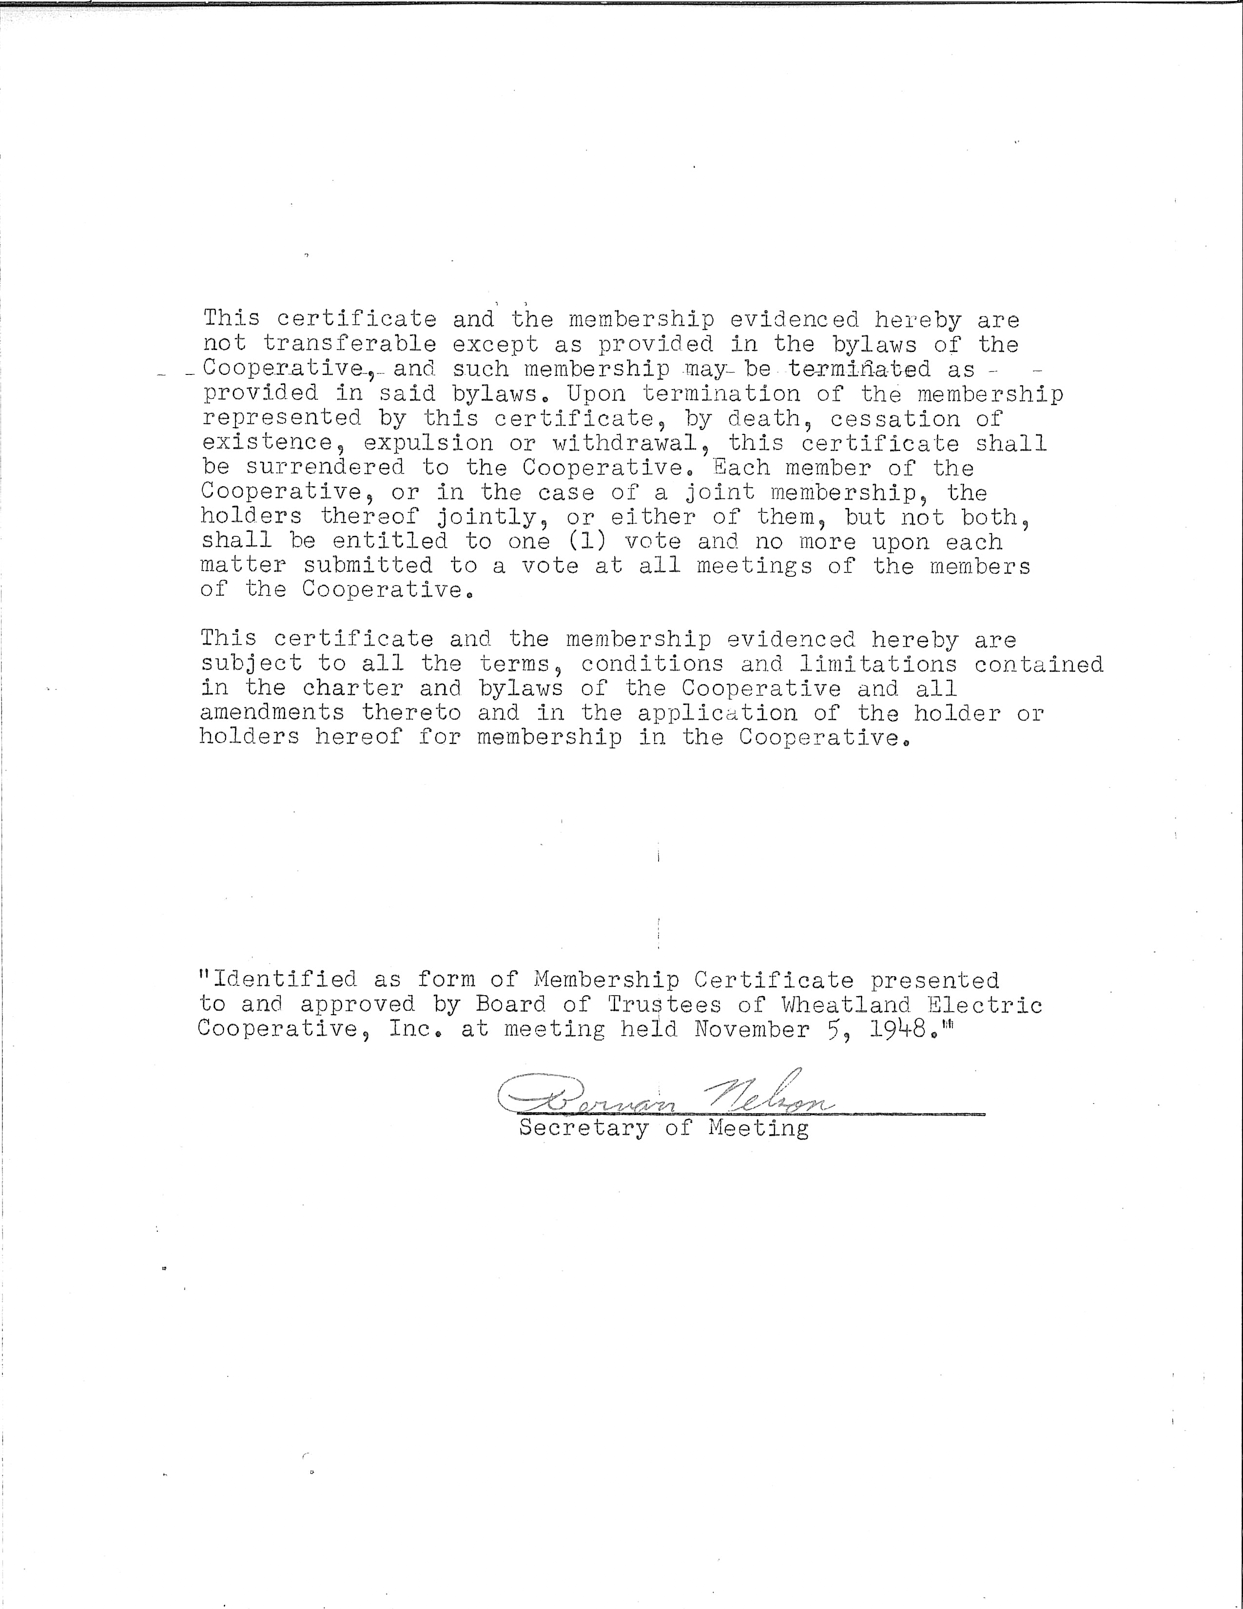 Original Membership Certificate Page 2